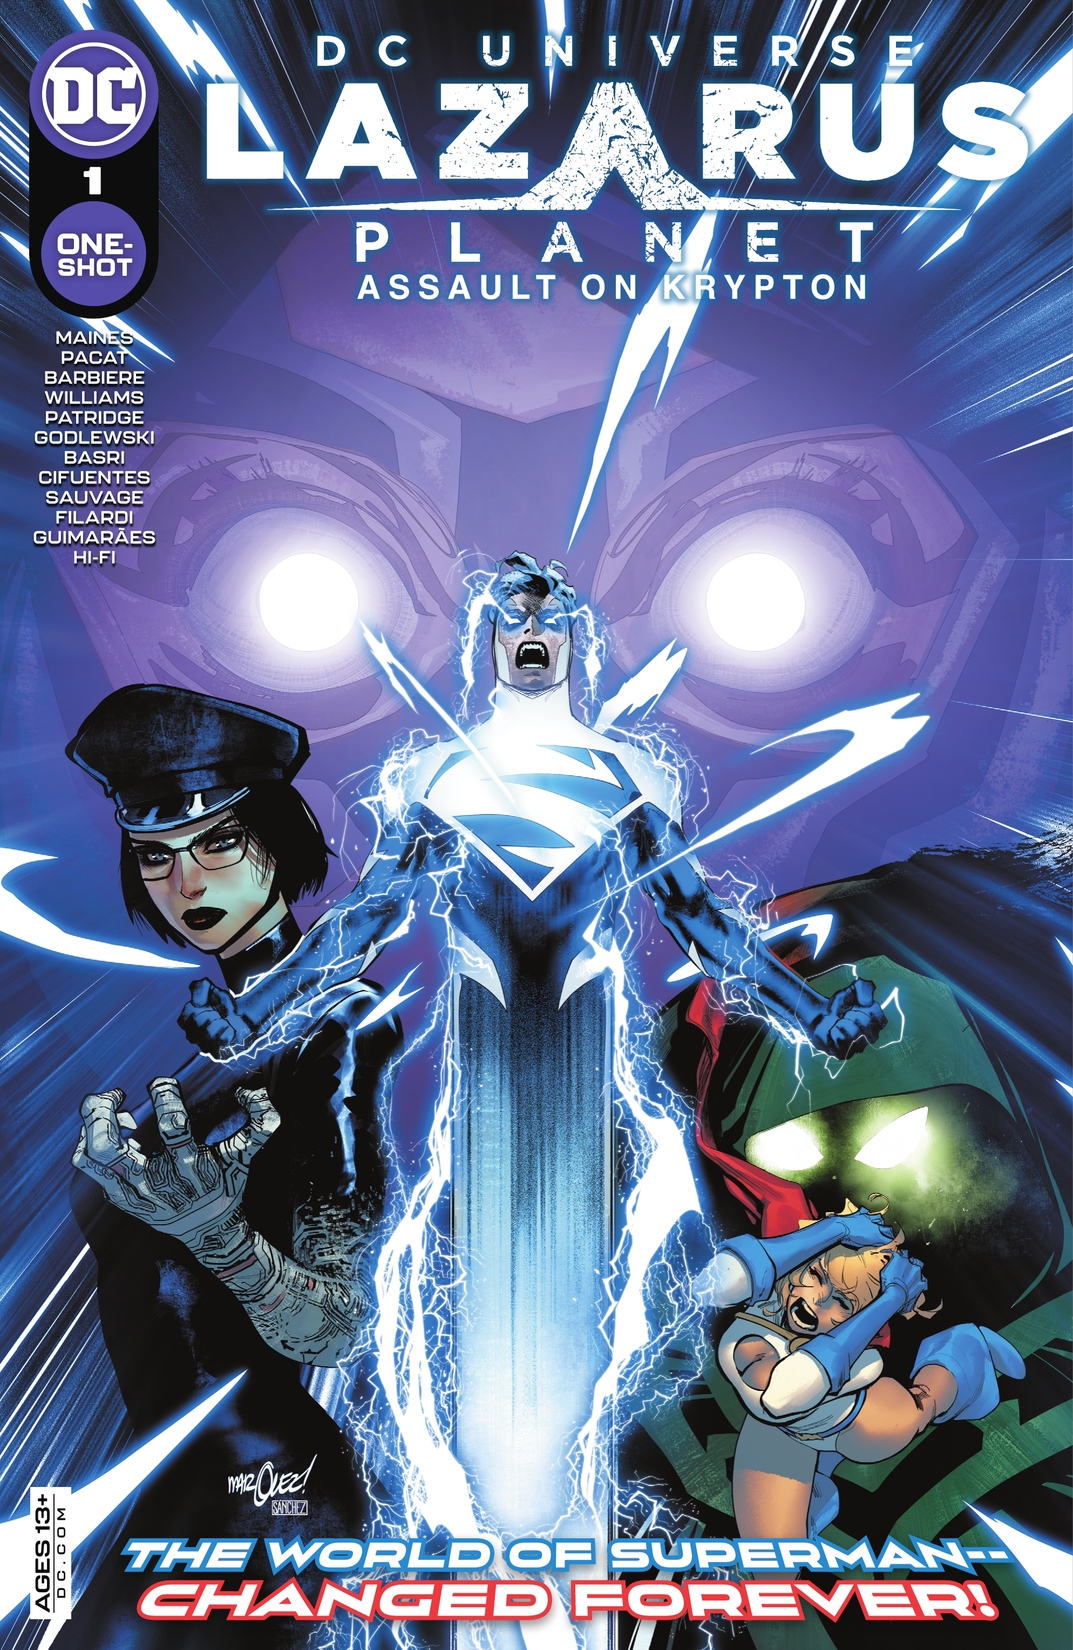 Lazarus Planet: Assault on Krypton #1 preview images